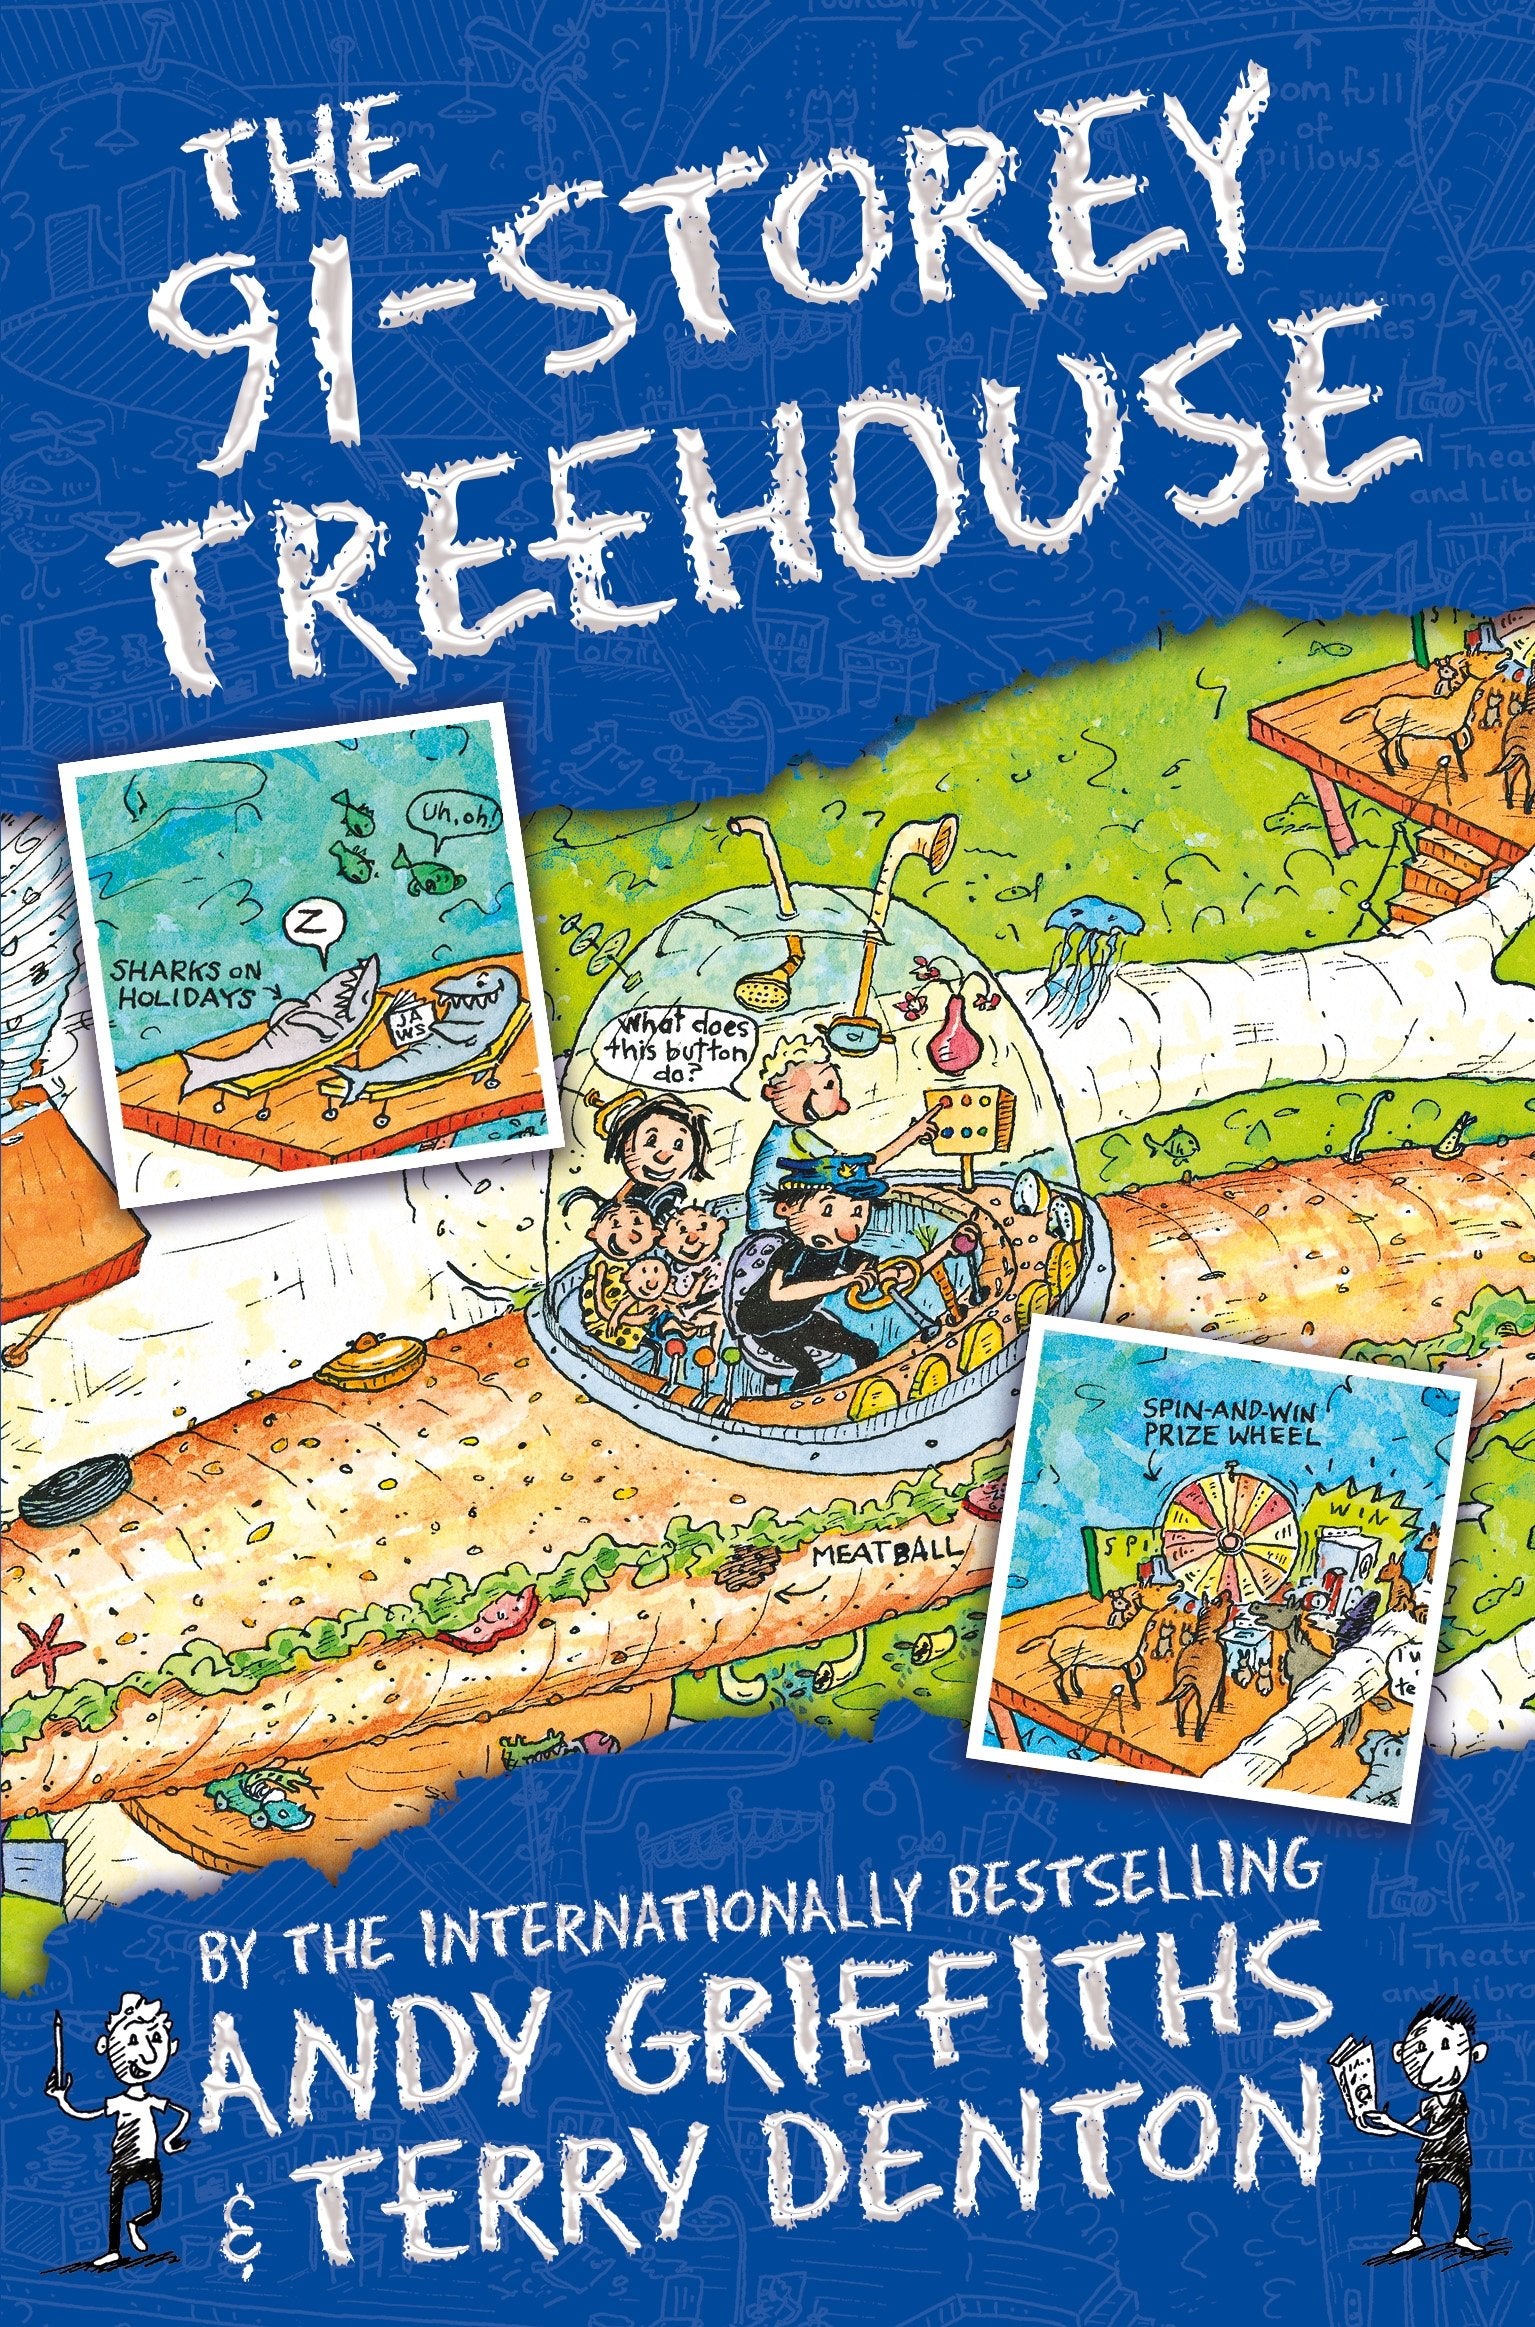 Tree House - The 91 Story Tree House